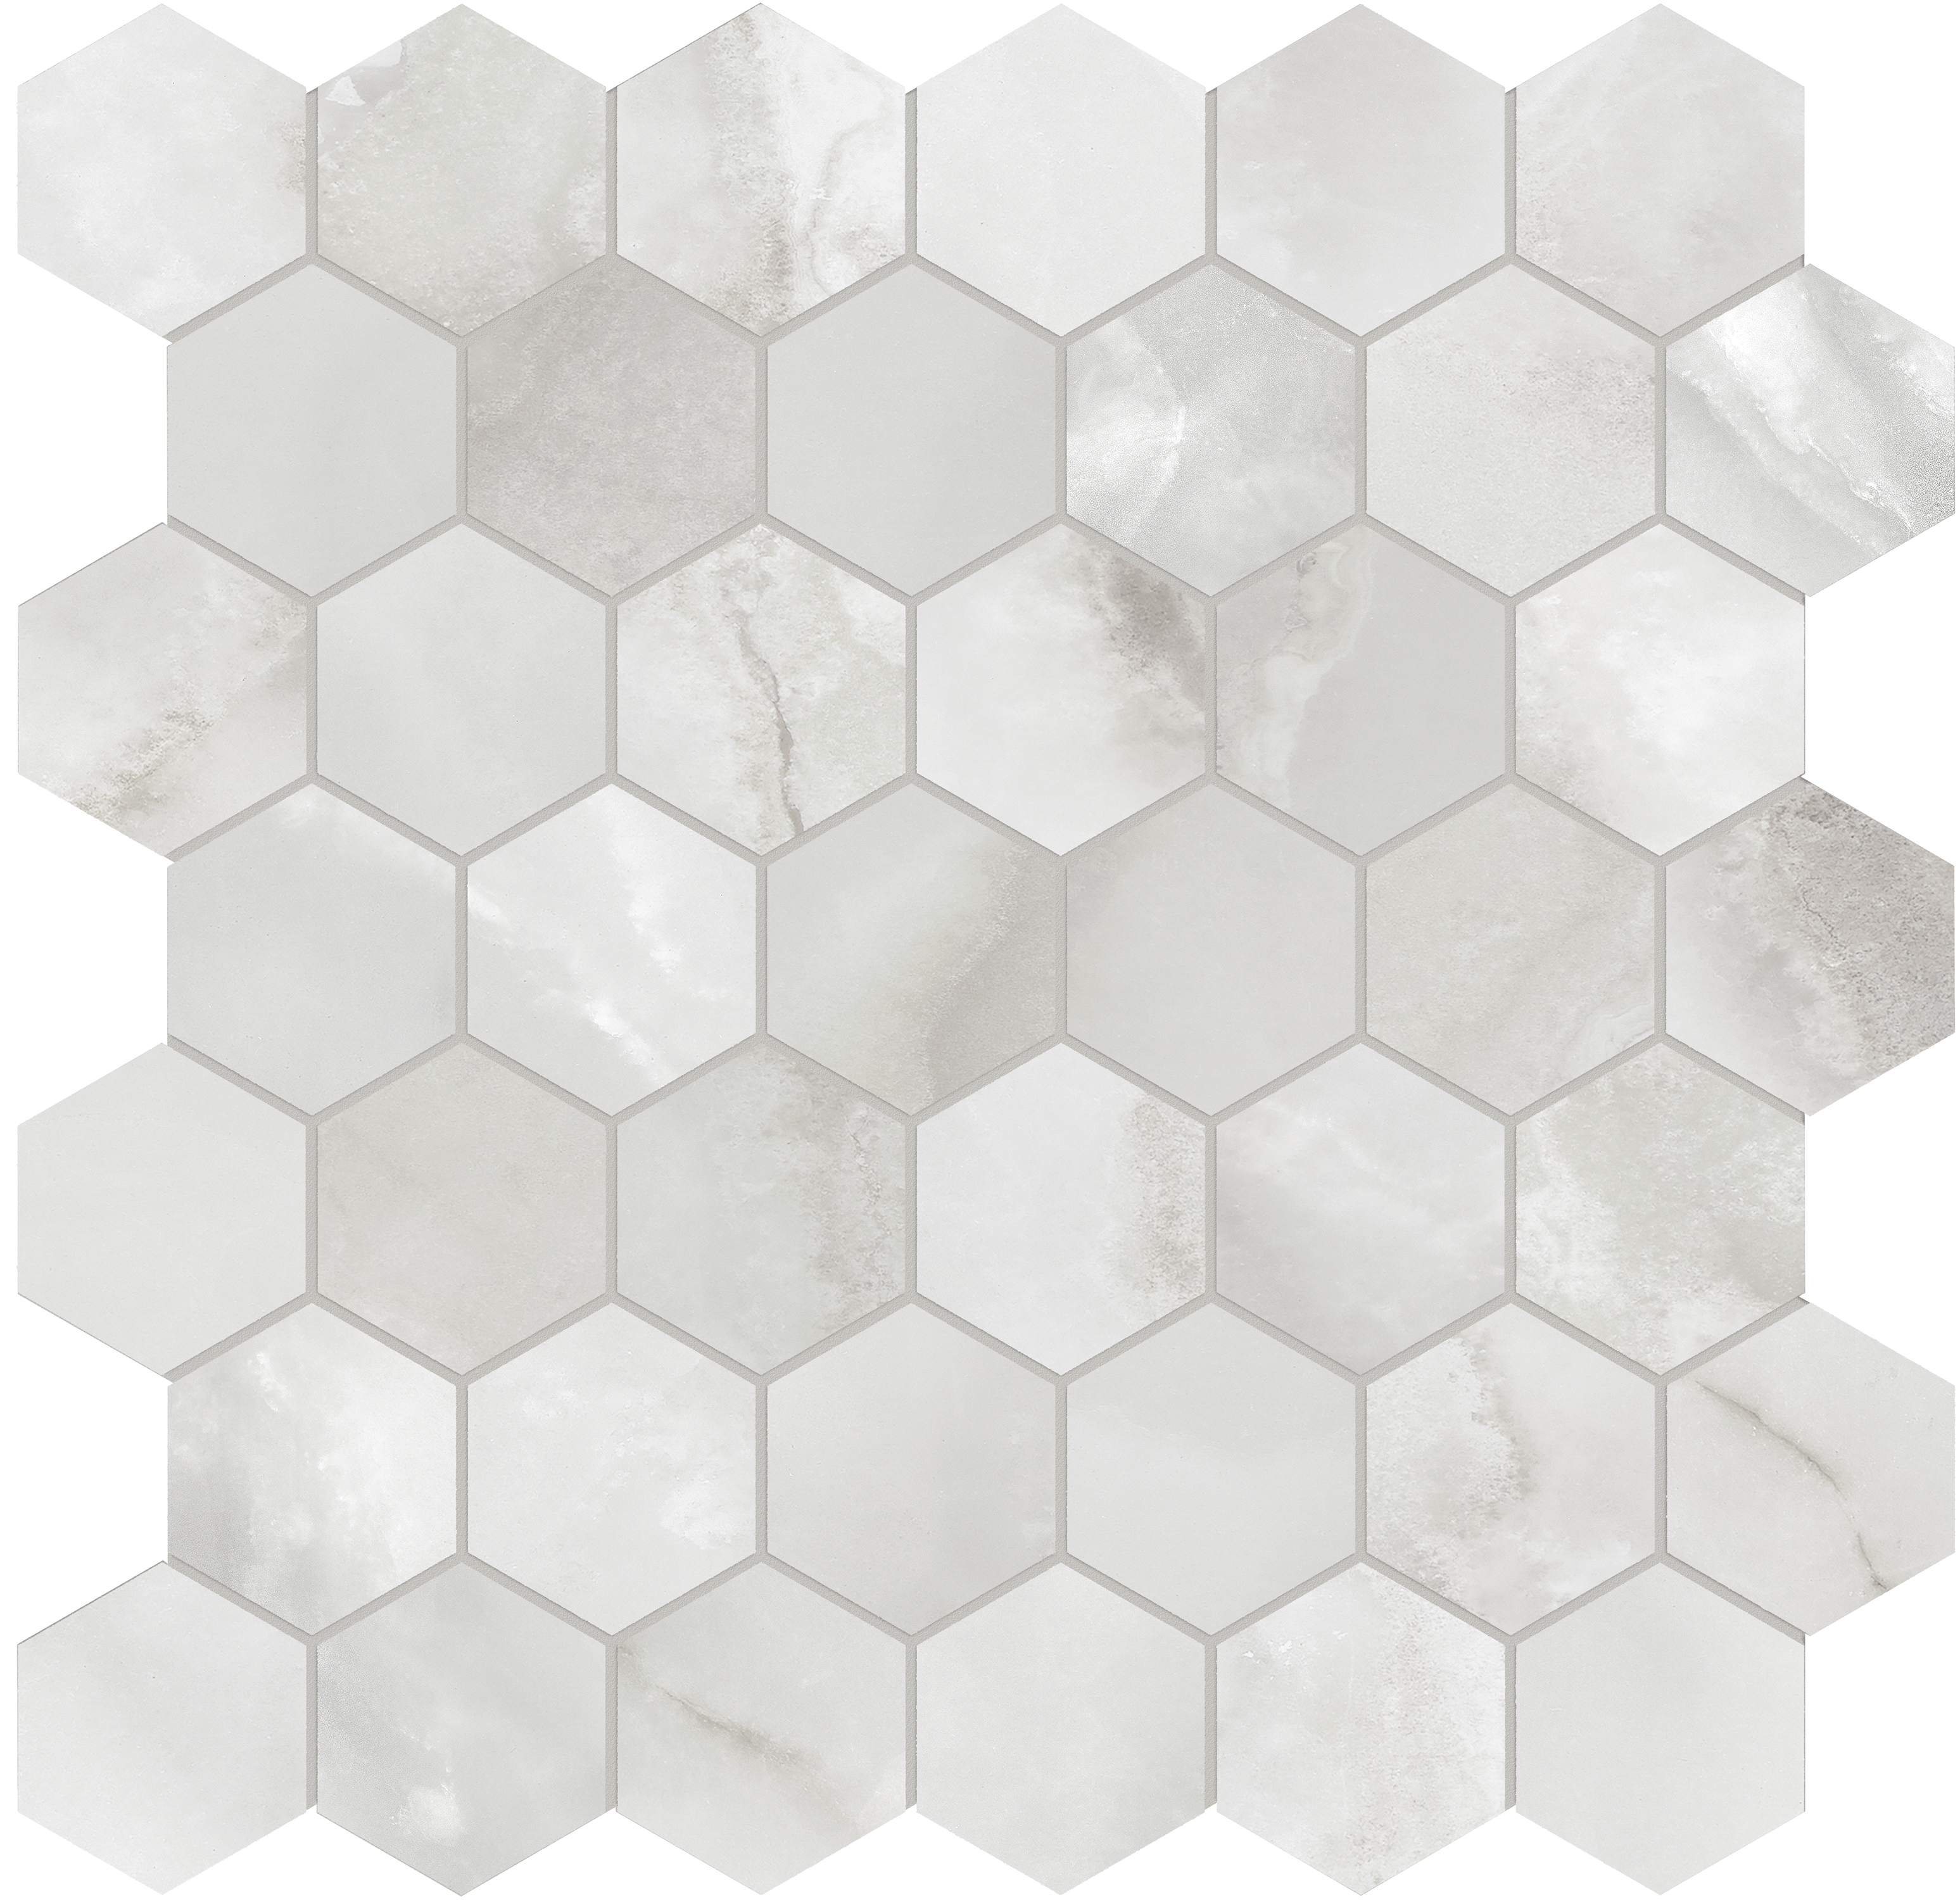 onyx nuvolato hexagon 2-inch pattern glazed porcelain mosaic from la marca anatolia collection distributed by surface group international polished finish straight edge edge mesh shape